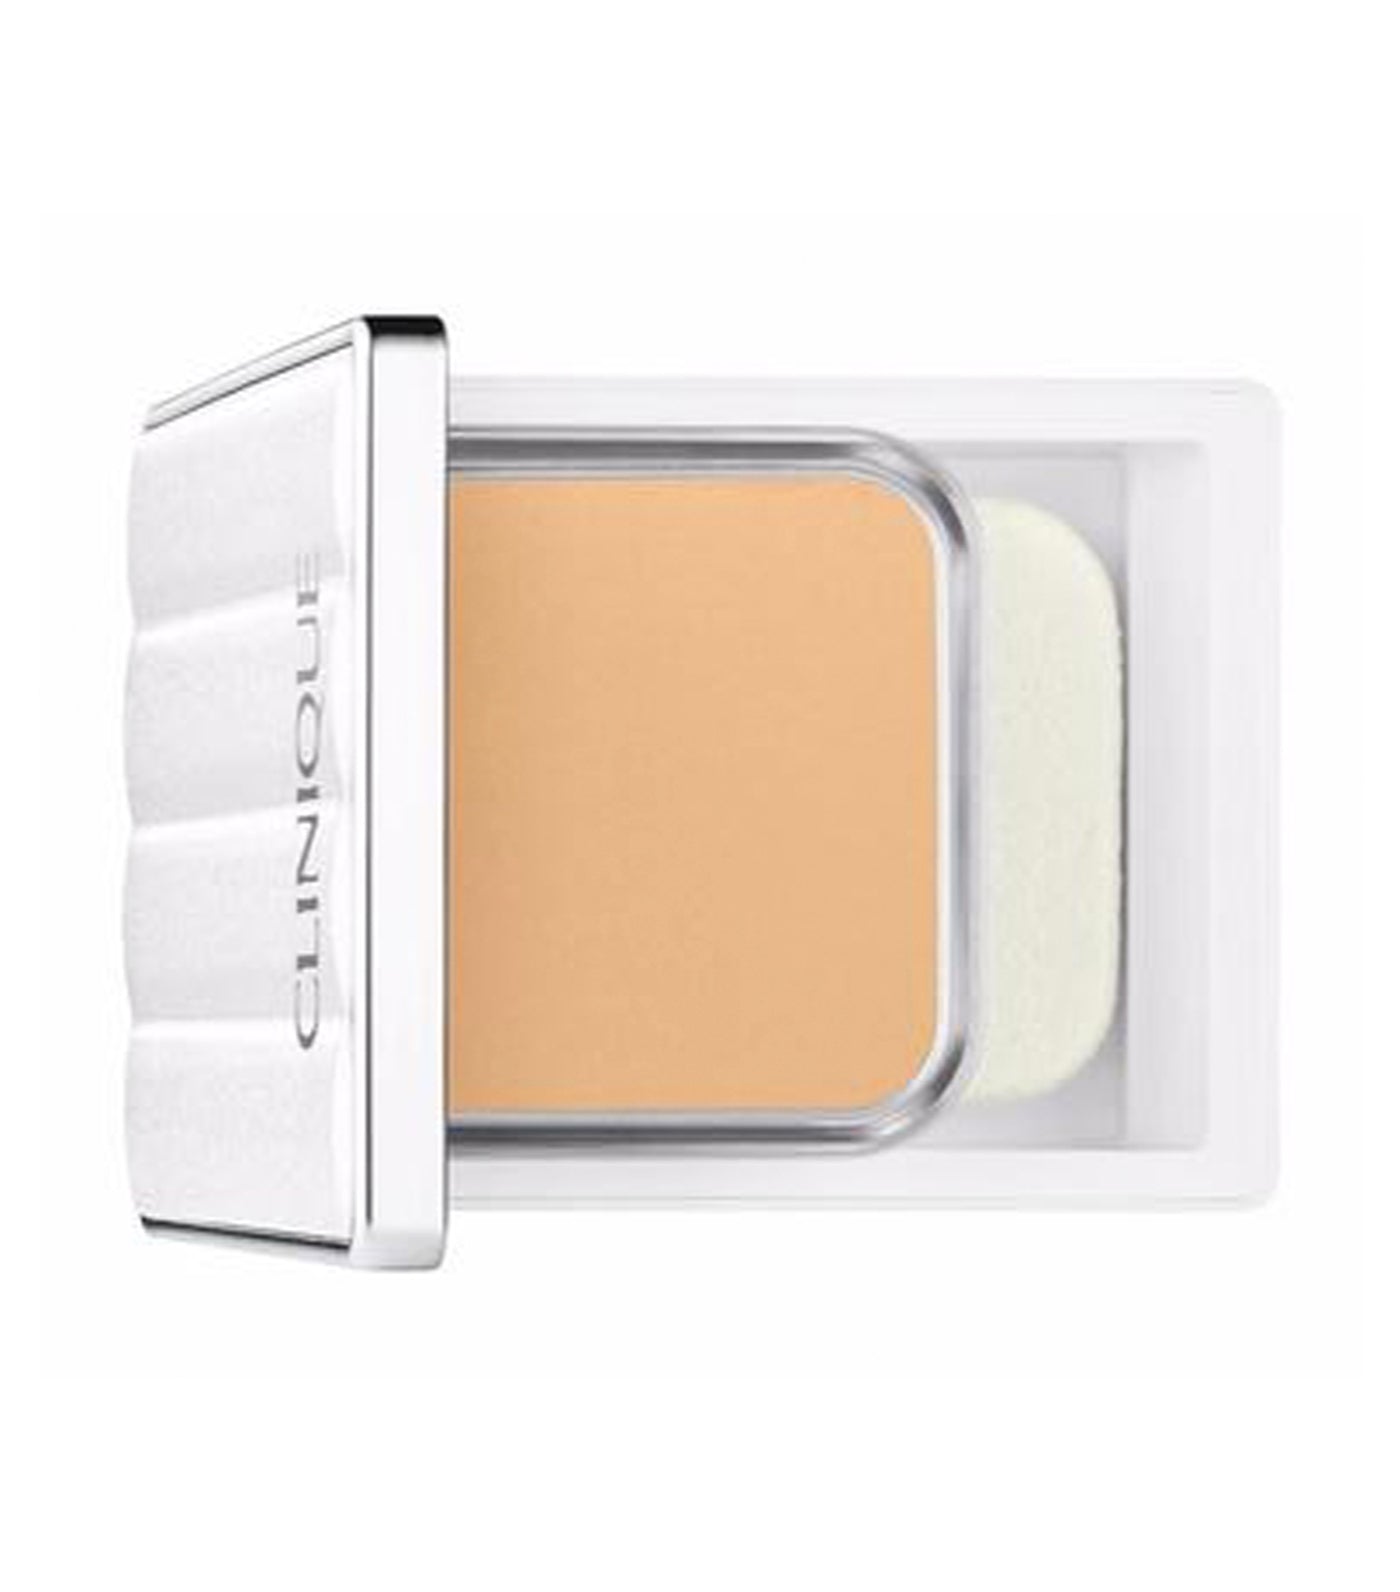 clinique true beige even better compact makeup broad spectrum spf 15